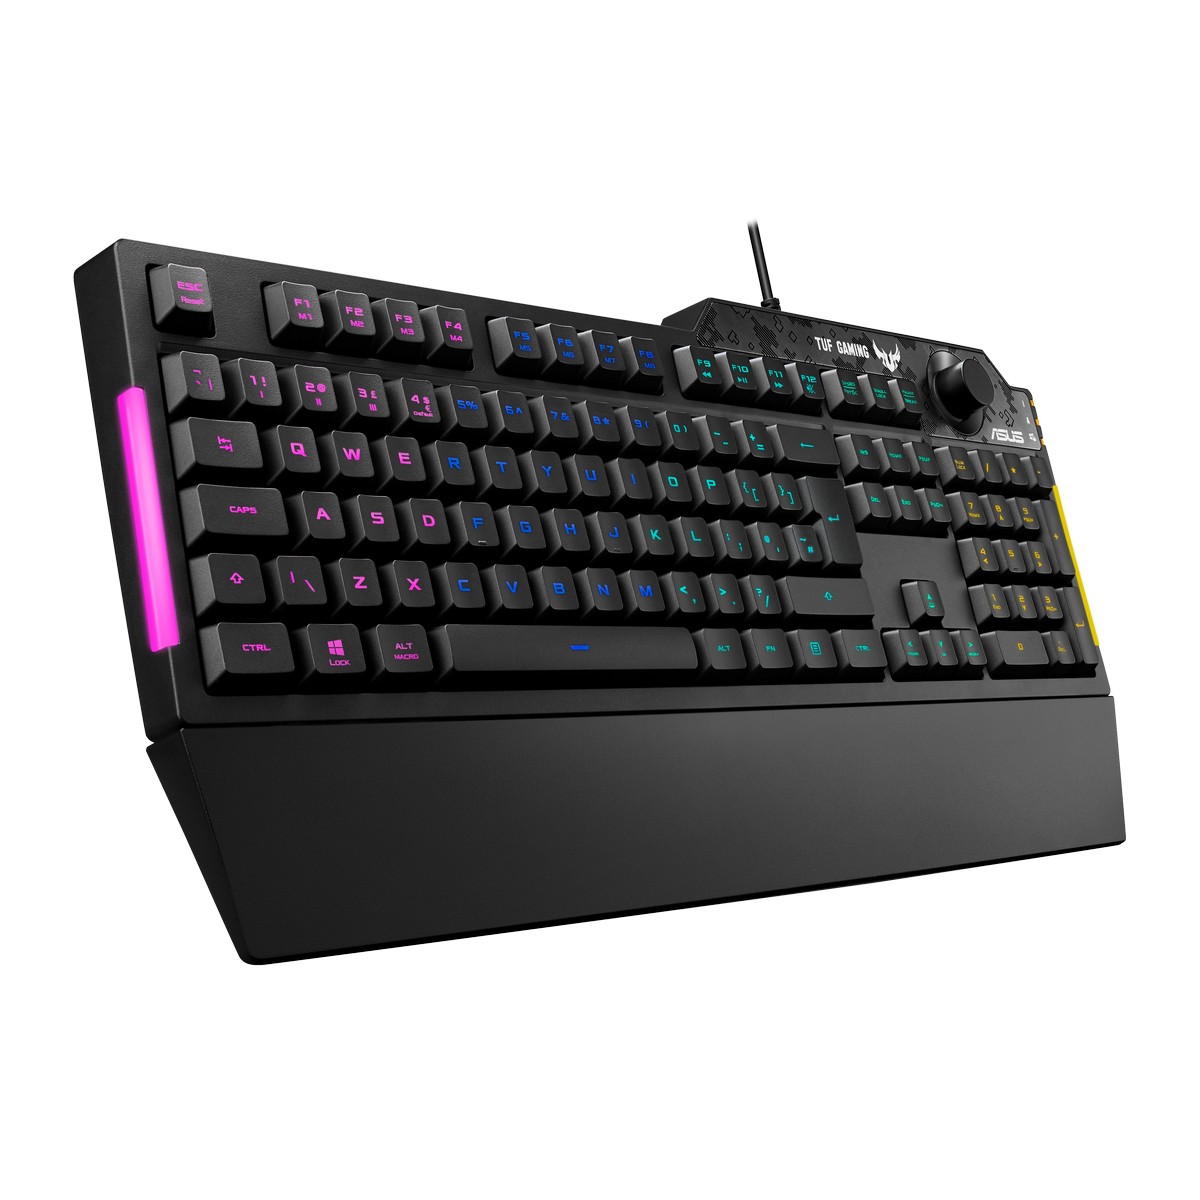 Asus - ASUS K1 Keyboard and M3 Mouse Gaming Bundle - UK Layout